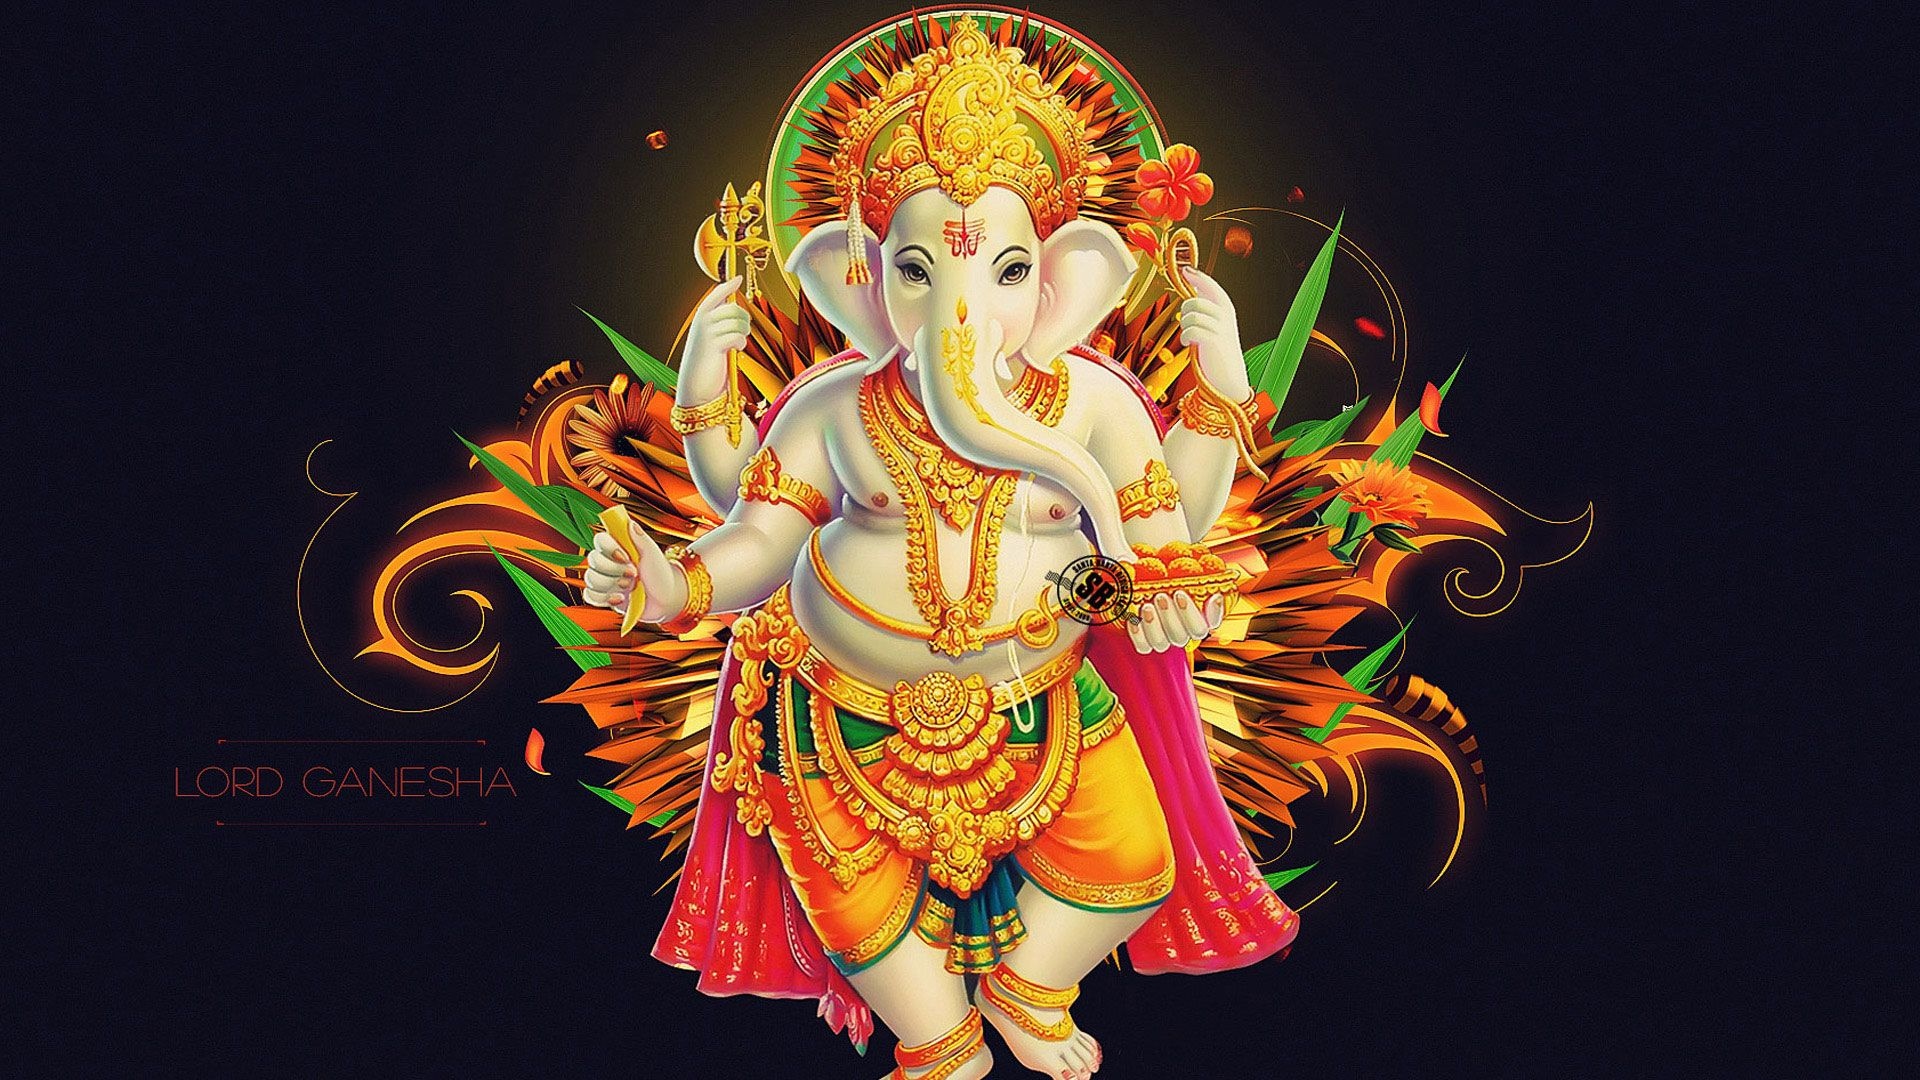 God Ganesh - Lord Ganesh